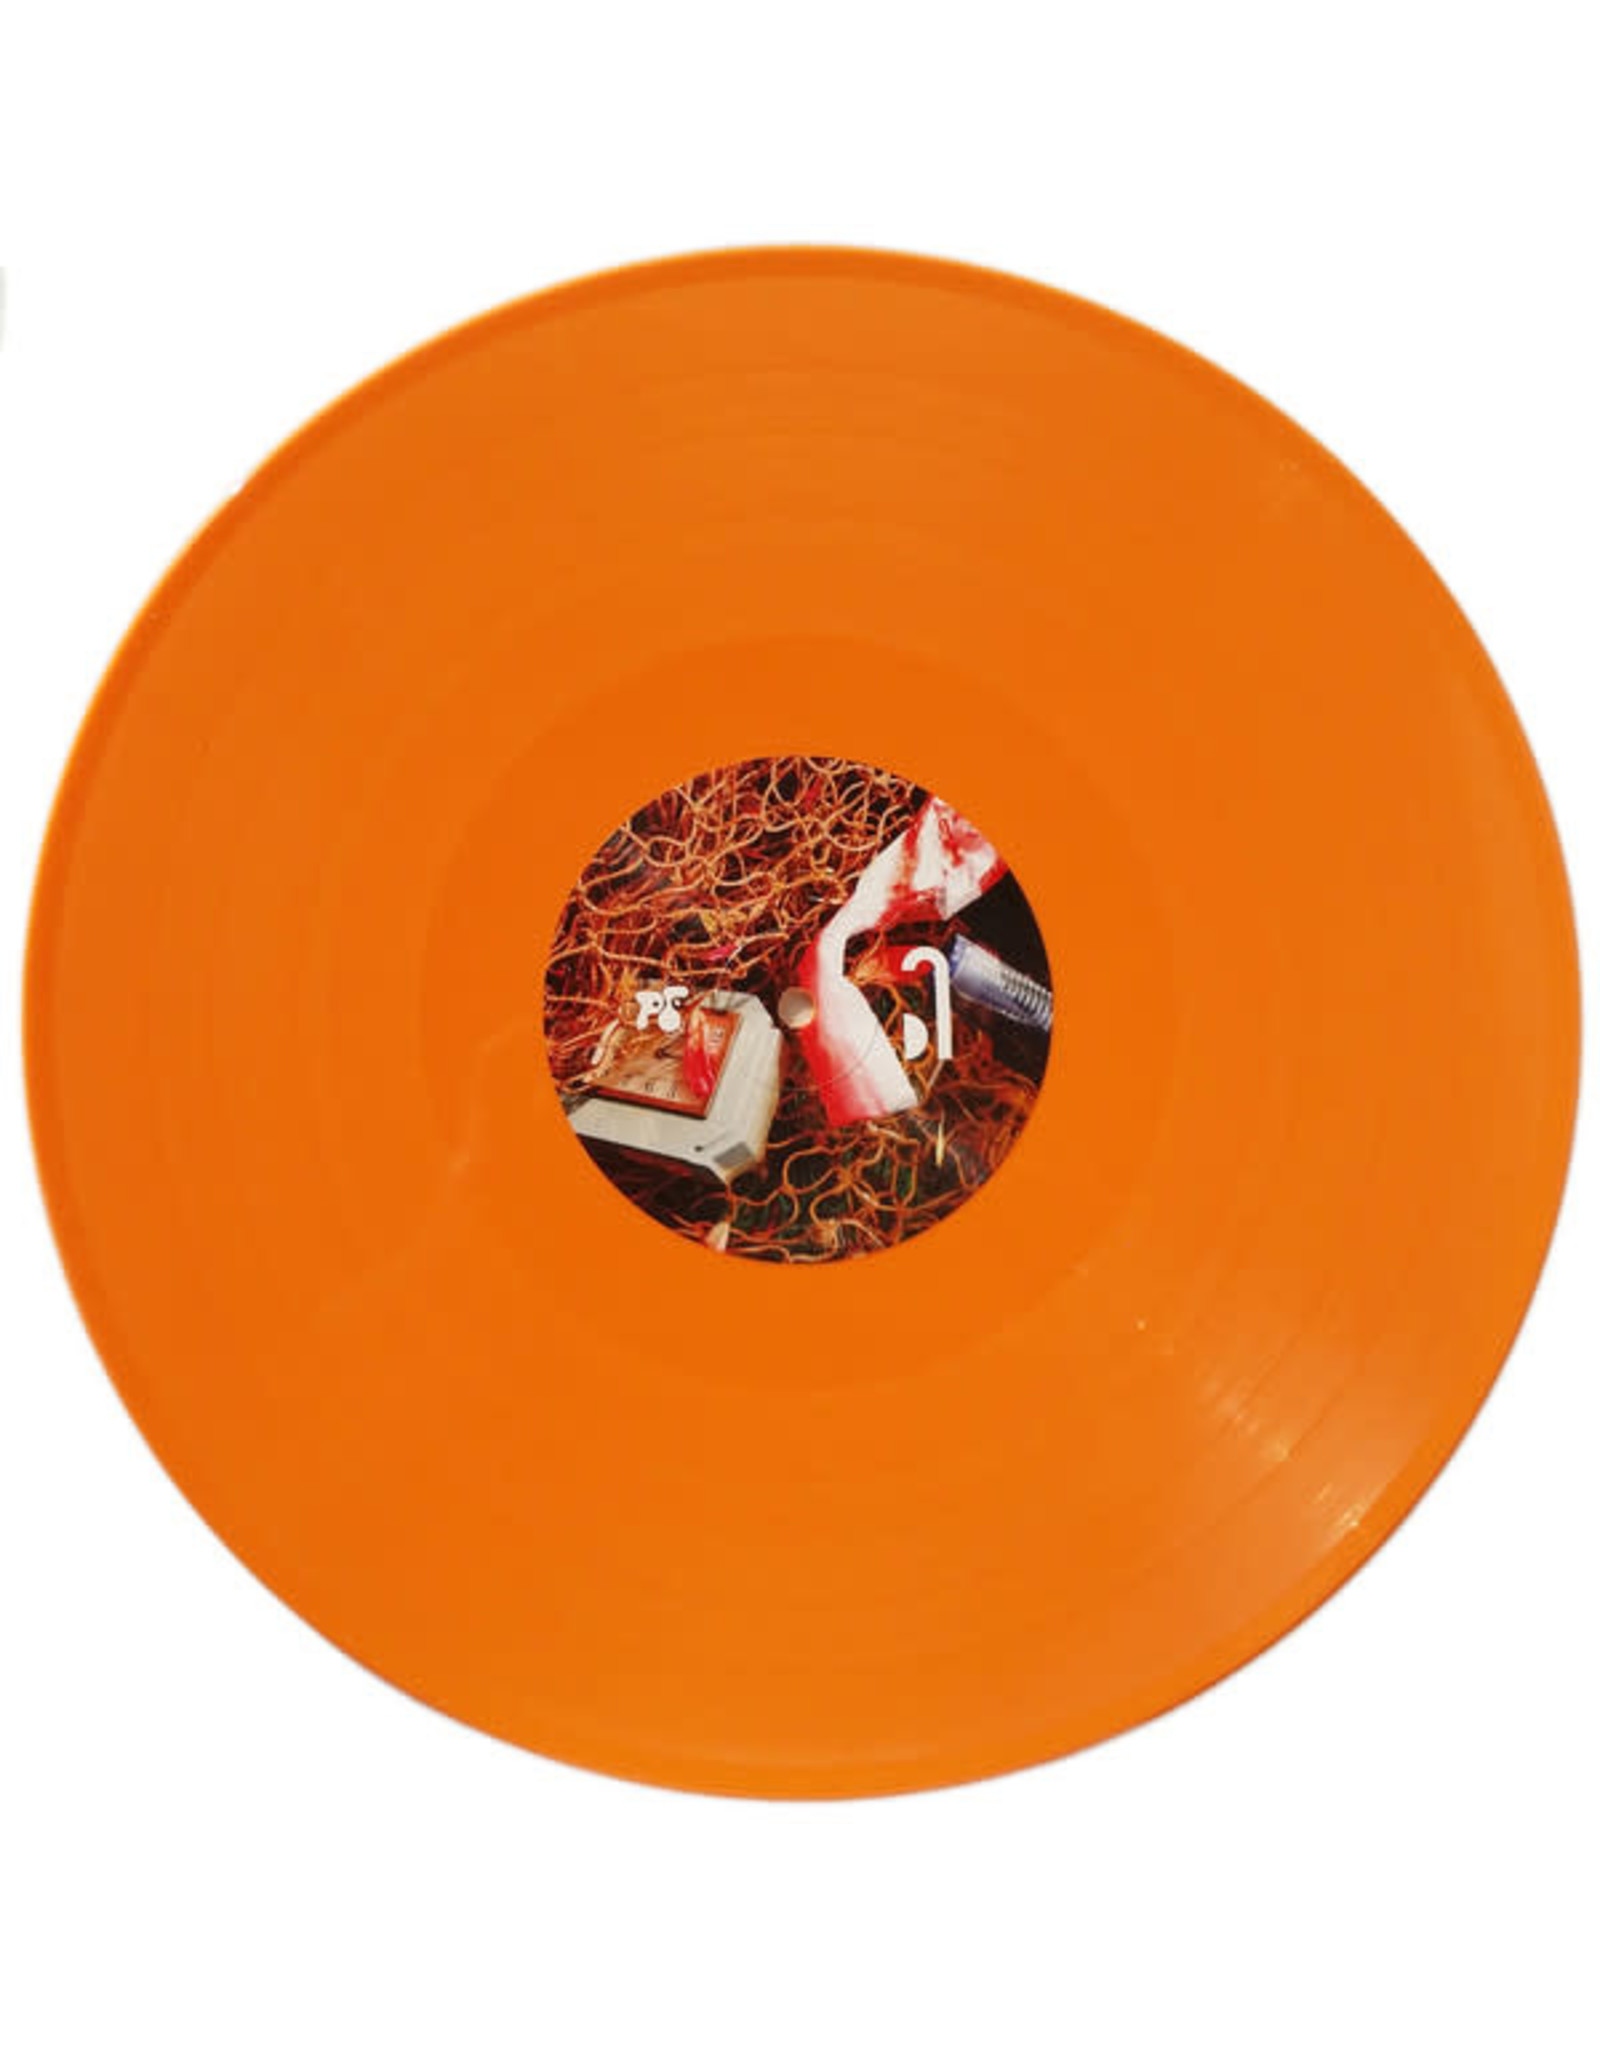 Austra - Hirudin (Orange Vinyl)